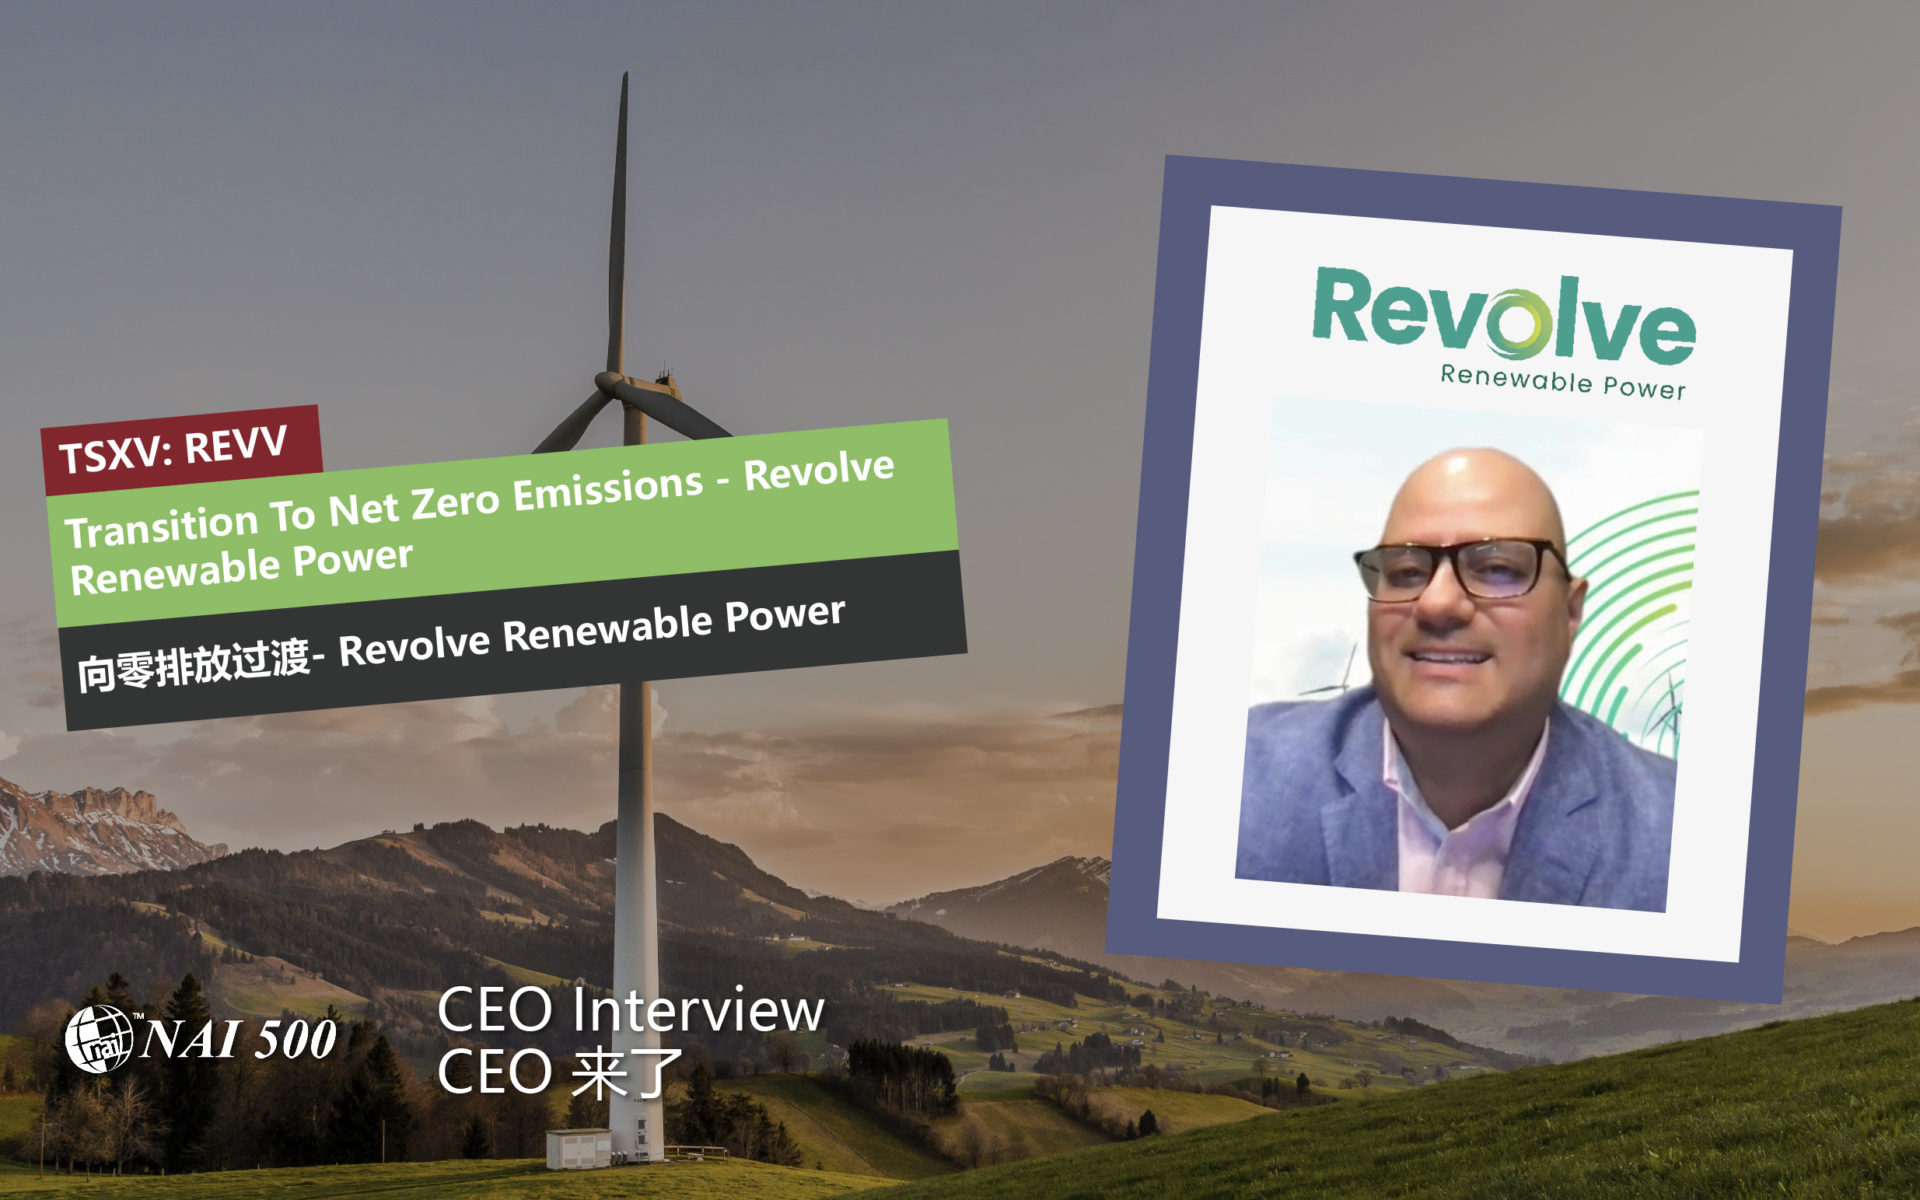 Revolve Renewable power ceo interview feature image